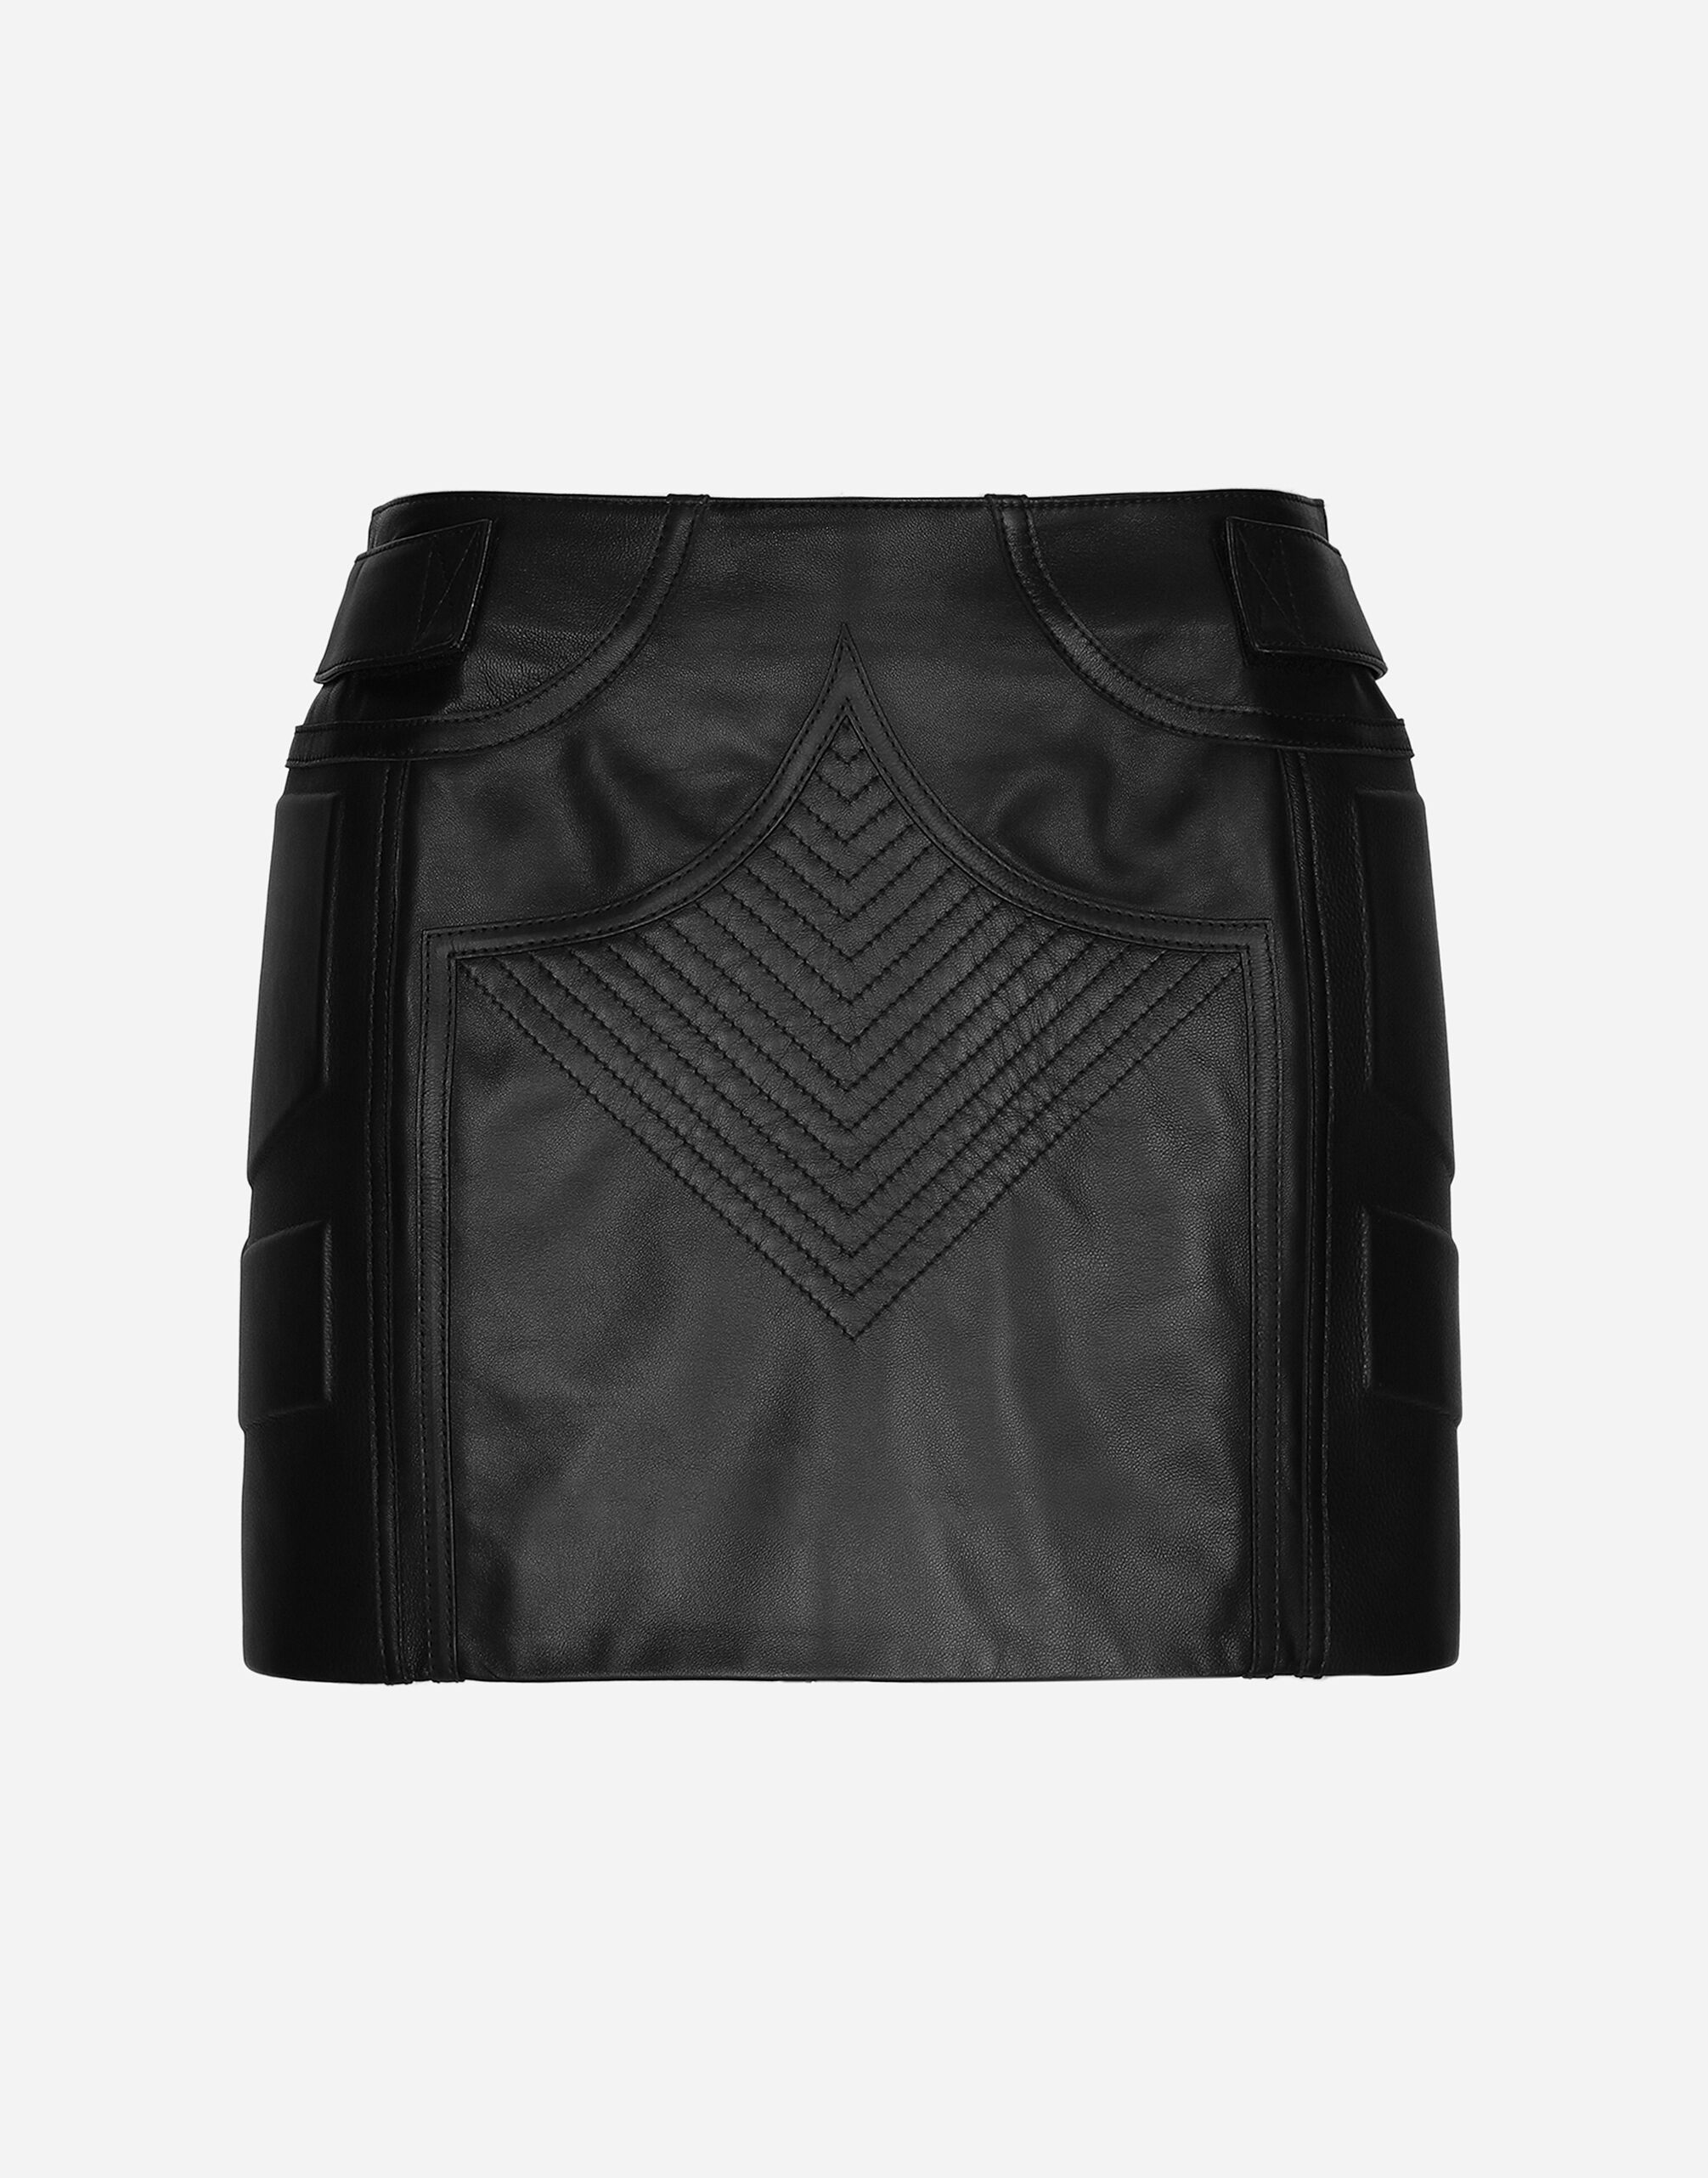 Dolce & Gabbana Nappa leather miniskirt Black VG2298VM587